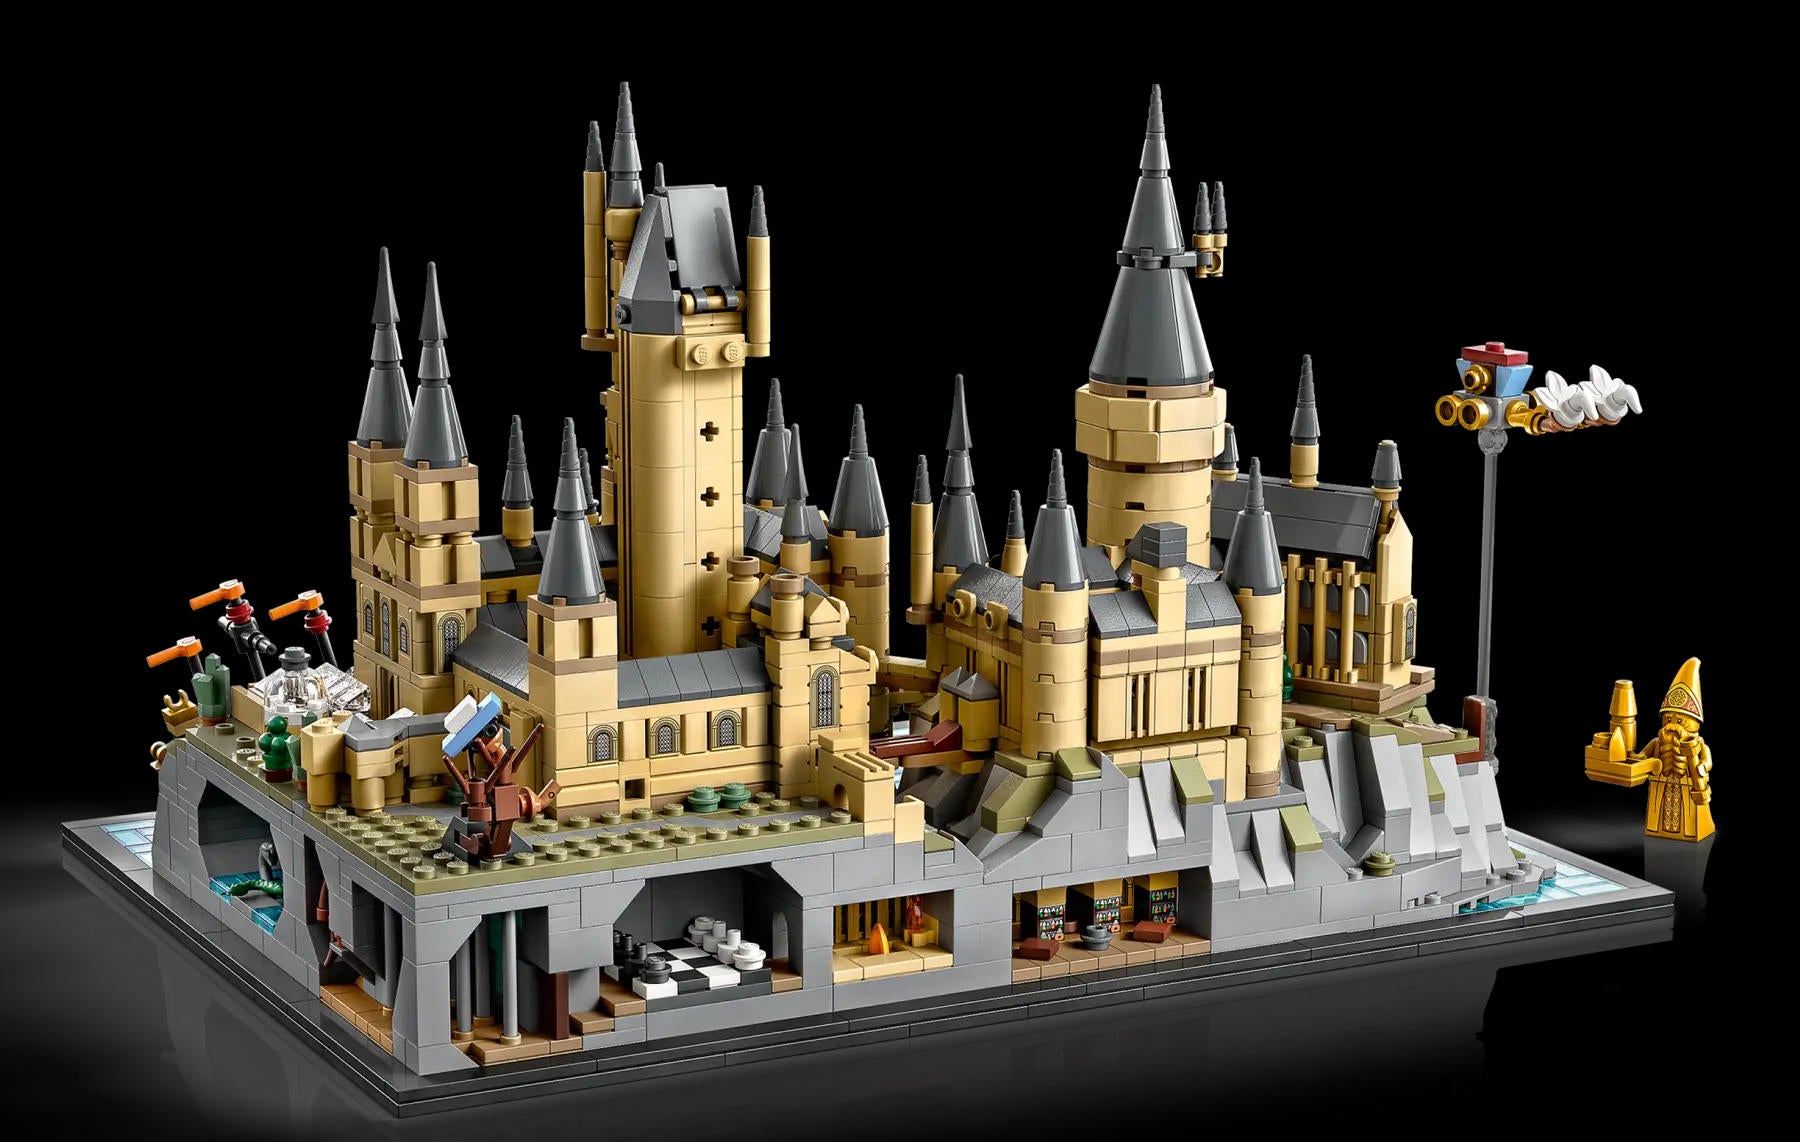 LEGO Harry Potter New Hogwarts Castle and Gringotts Bank Set Launch